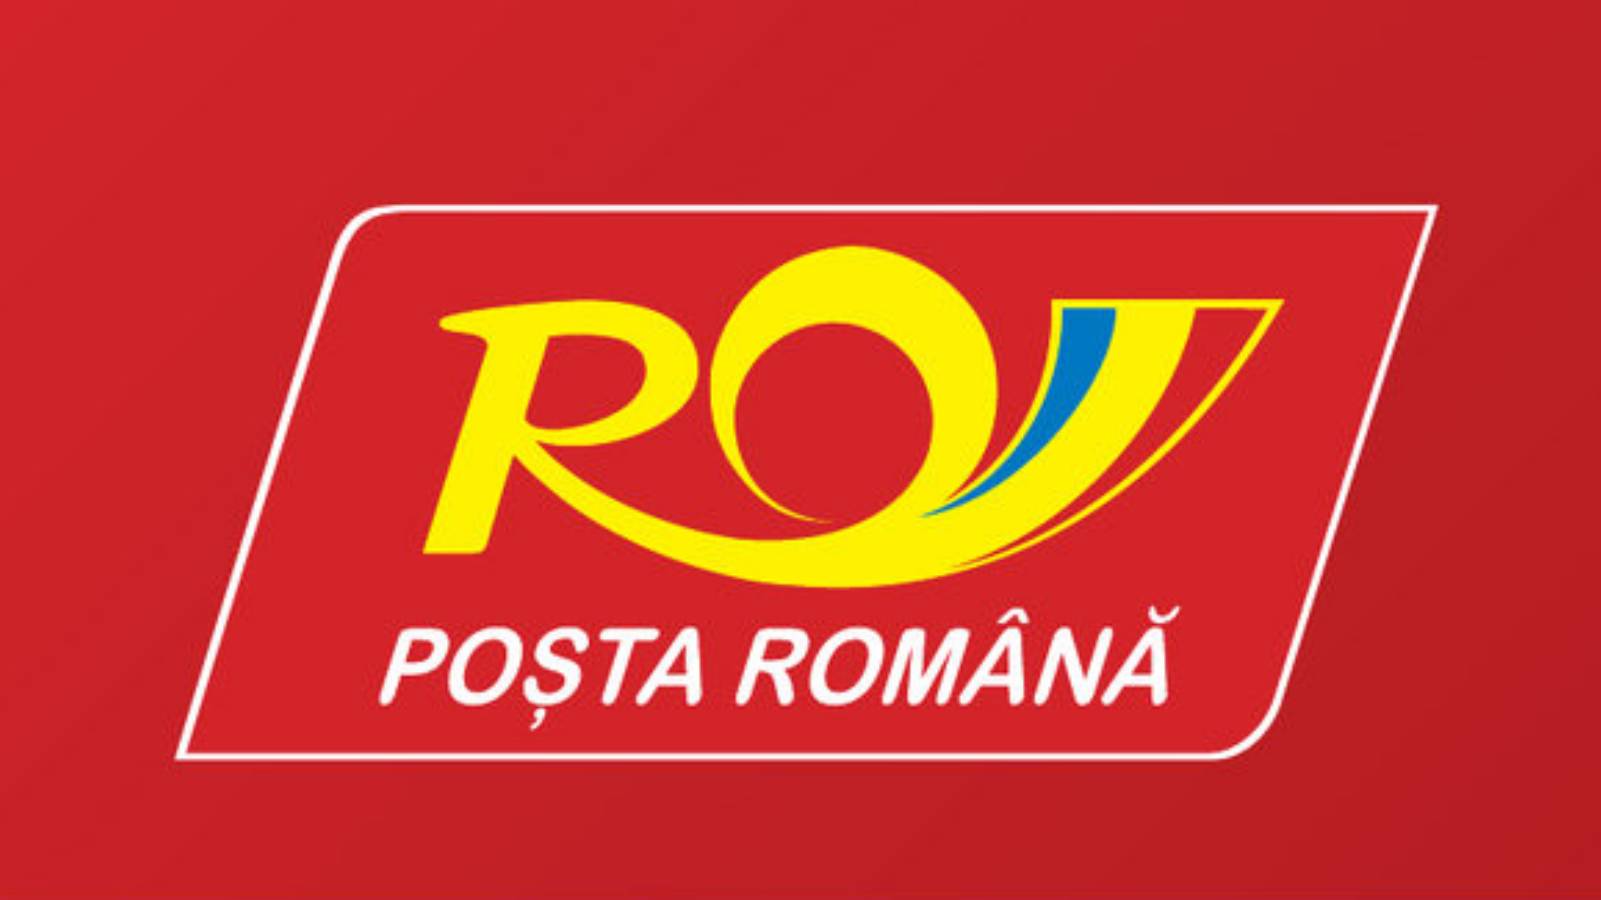 Roemeense post verboden artikelen